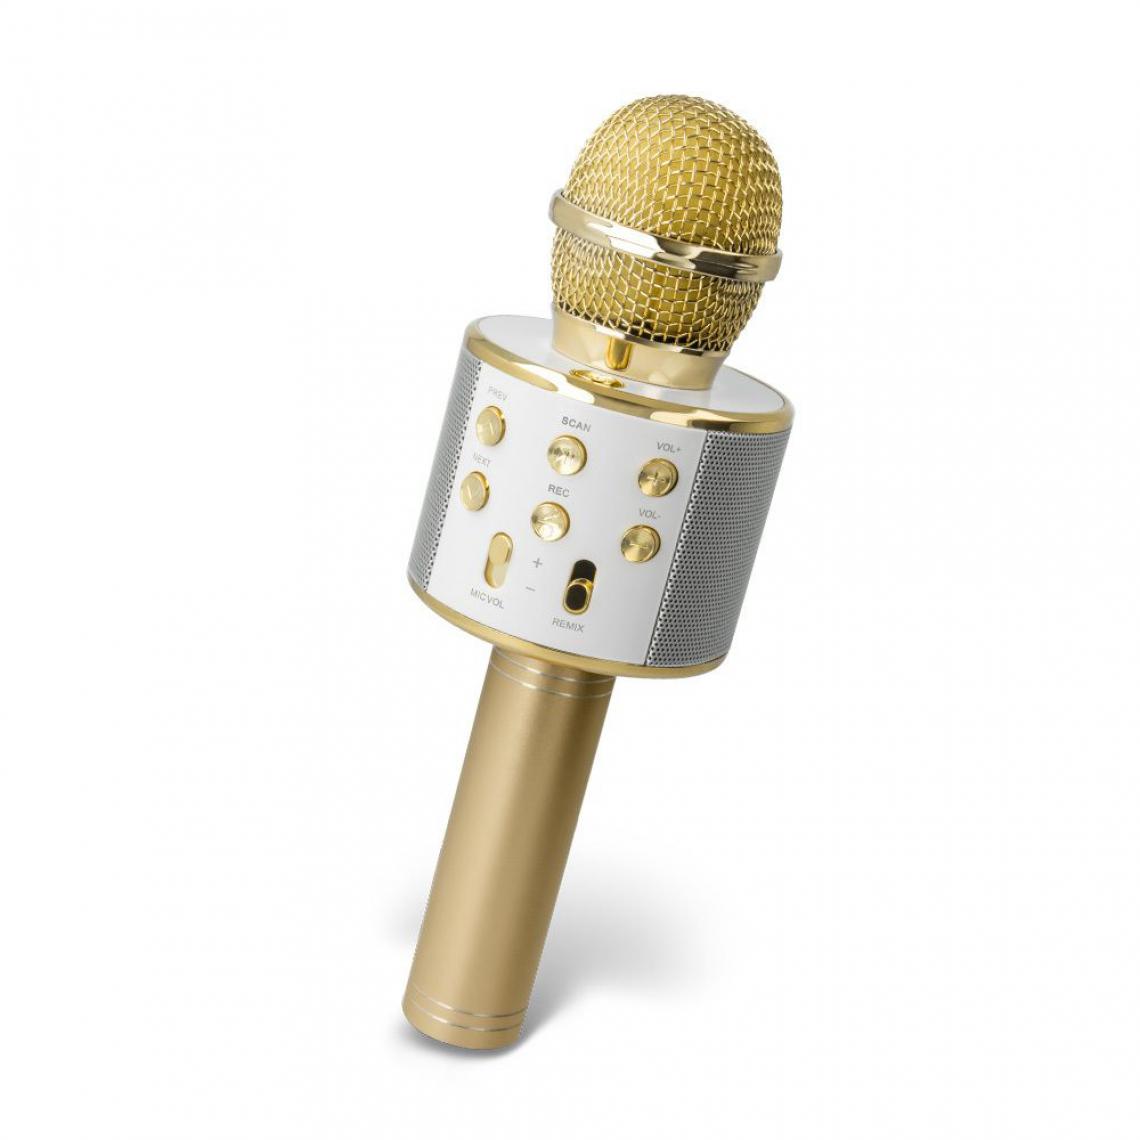 Ozzzo - Microphone Karaoke bluetooth haut parleur ozzzo Gold Or pour SAMSUNG Galaxy A6 Plus 2018 - Autres accessoires smartphone